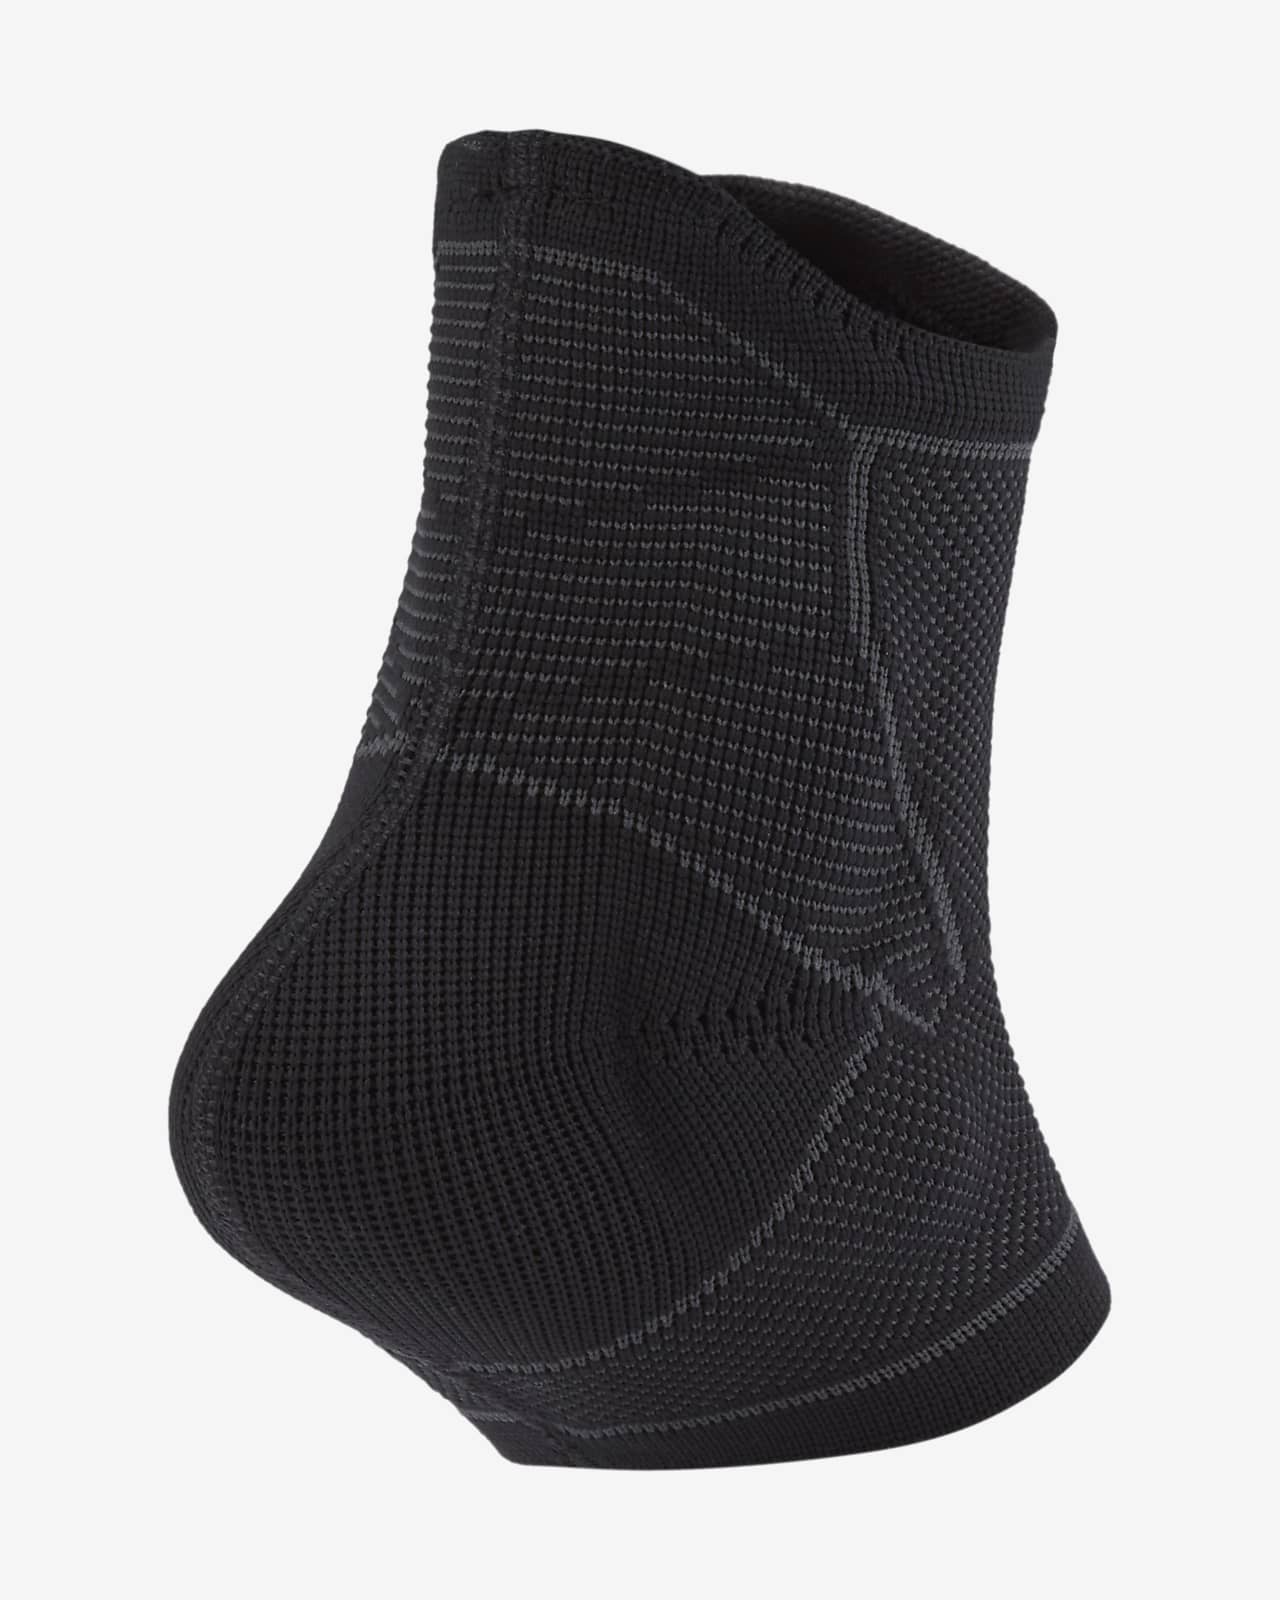 Pro Knitted Sleeve. Nike.com